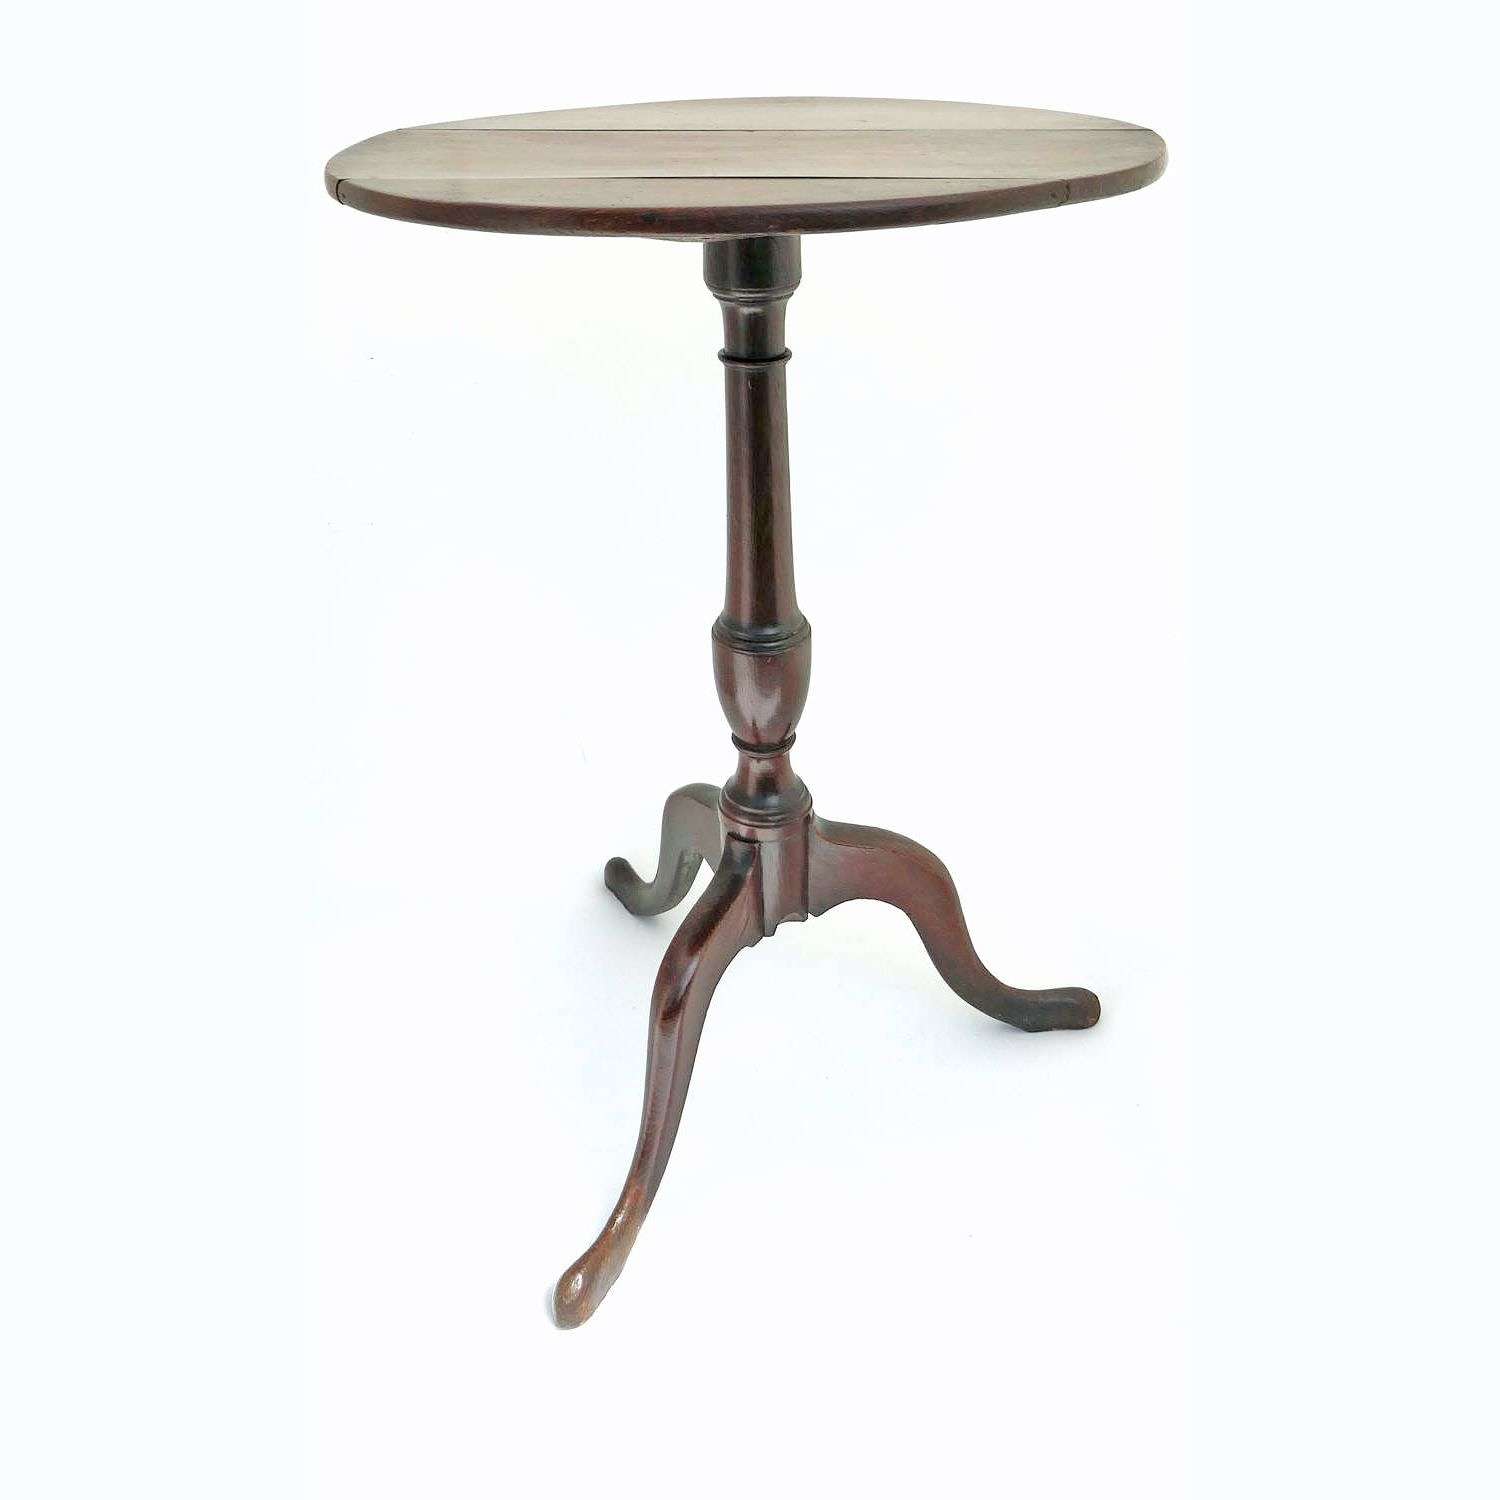 Antique Country Furniture 18thc Oak Tripod Table - English C1760-80.